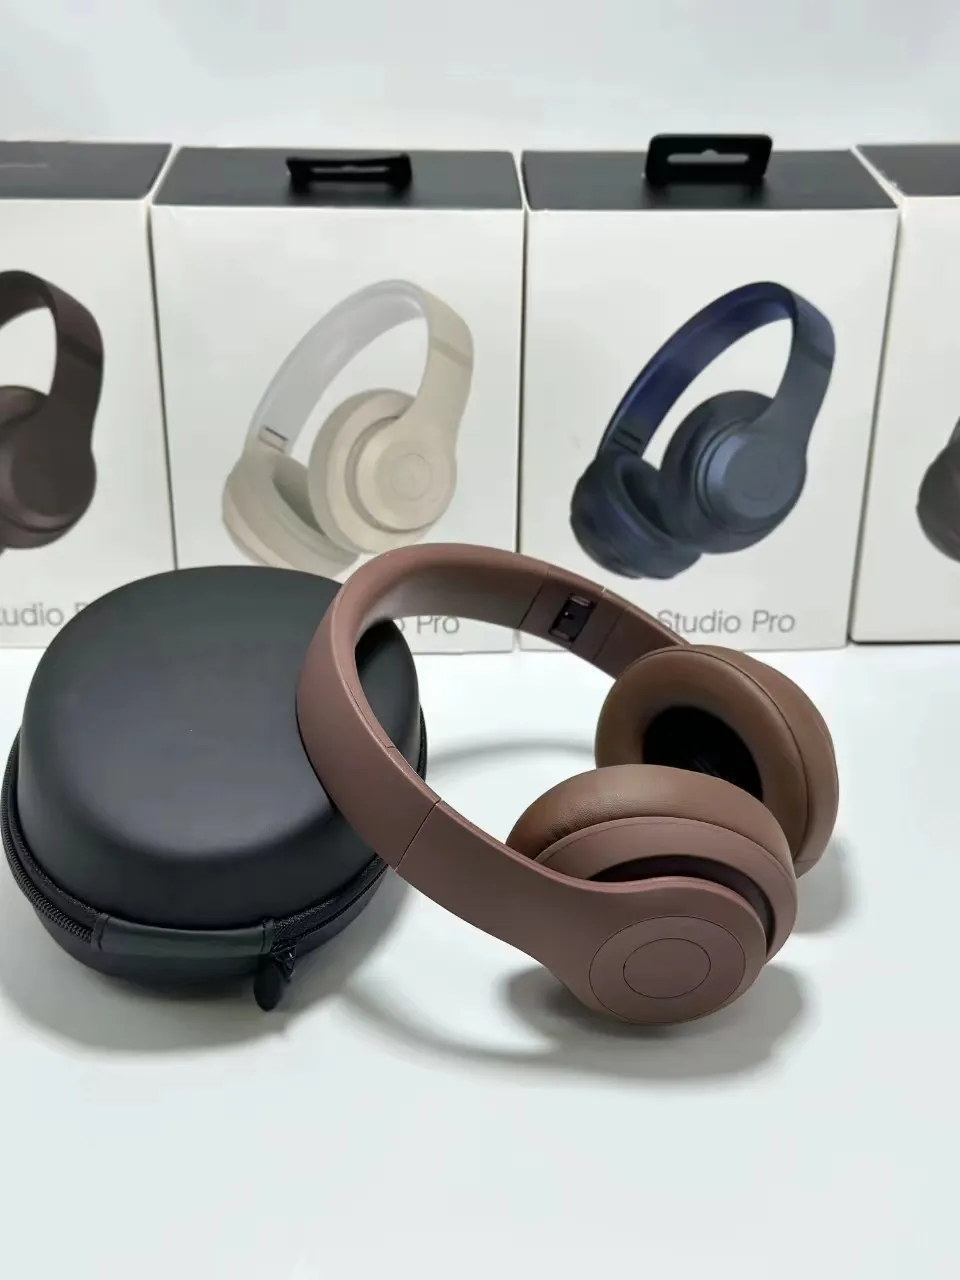 Headsets 3 draadloze hoofdtelefoons Wireless oortelefoons Bluetooth Noise Annulering beat hoofdtelefoon sporthoofdset kop draadloze microfoon headset11 28